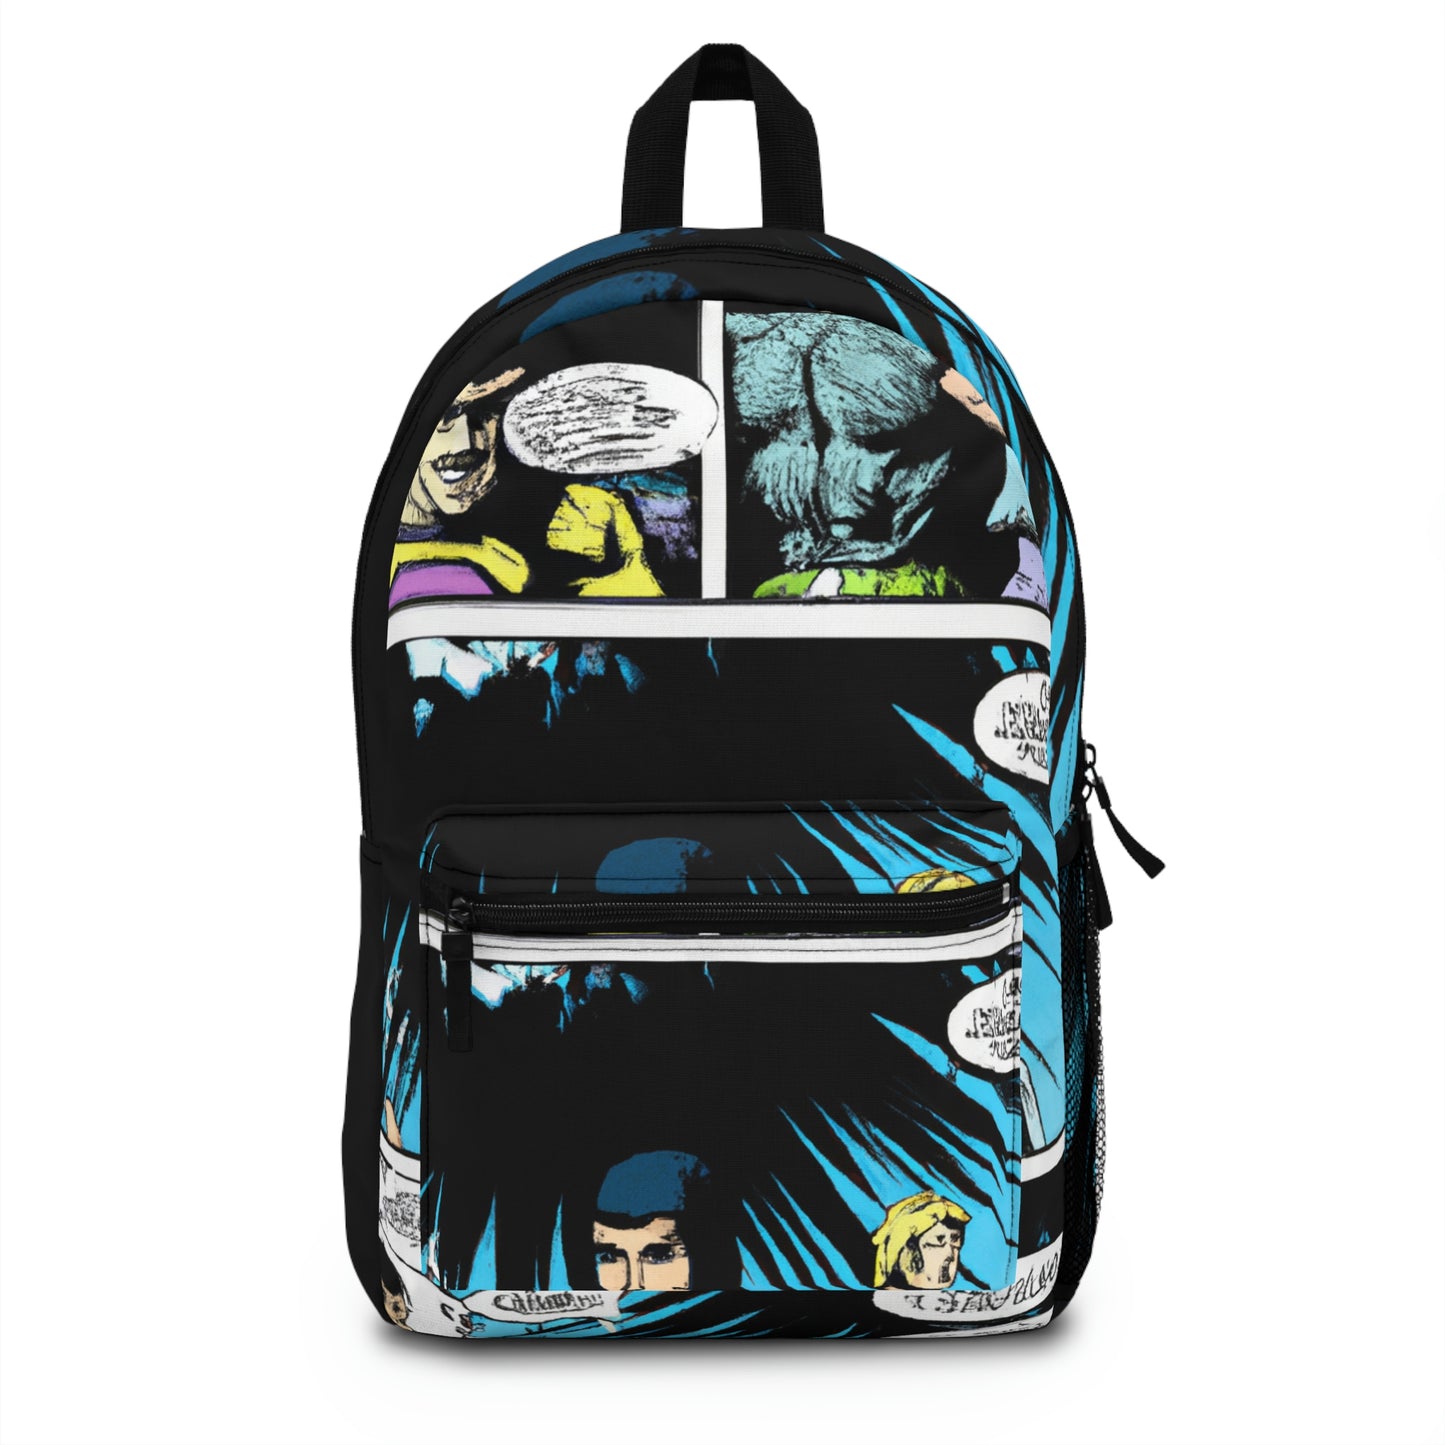 Atom Bomb man - Comic Book Backpack